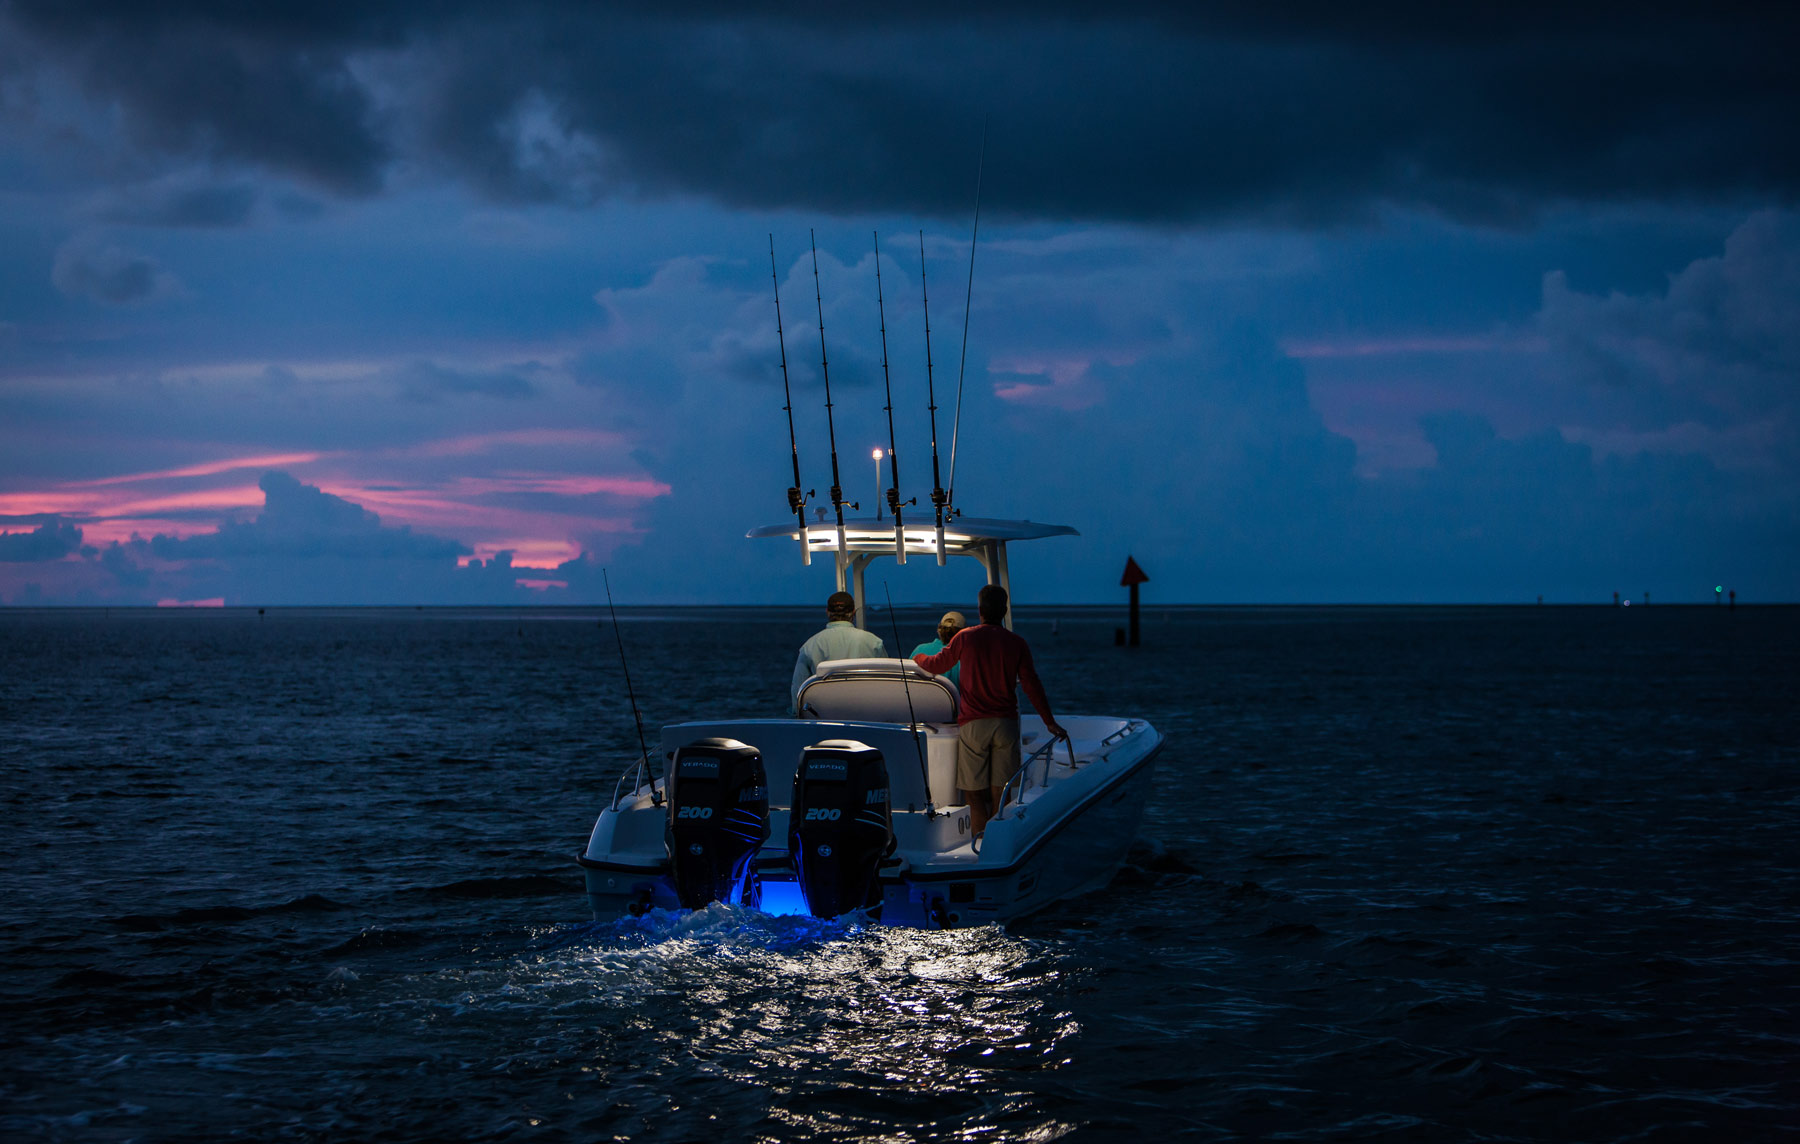 Florida Boating Photographer Richard Steinberger